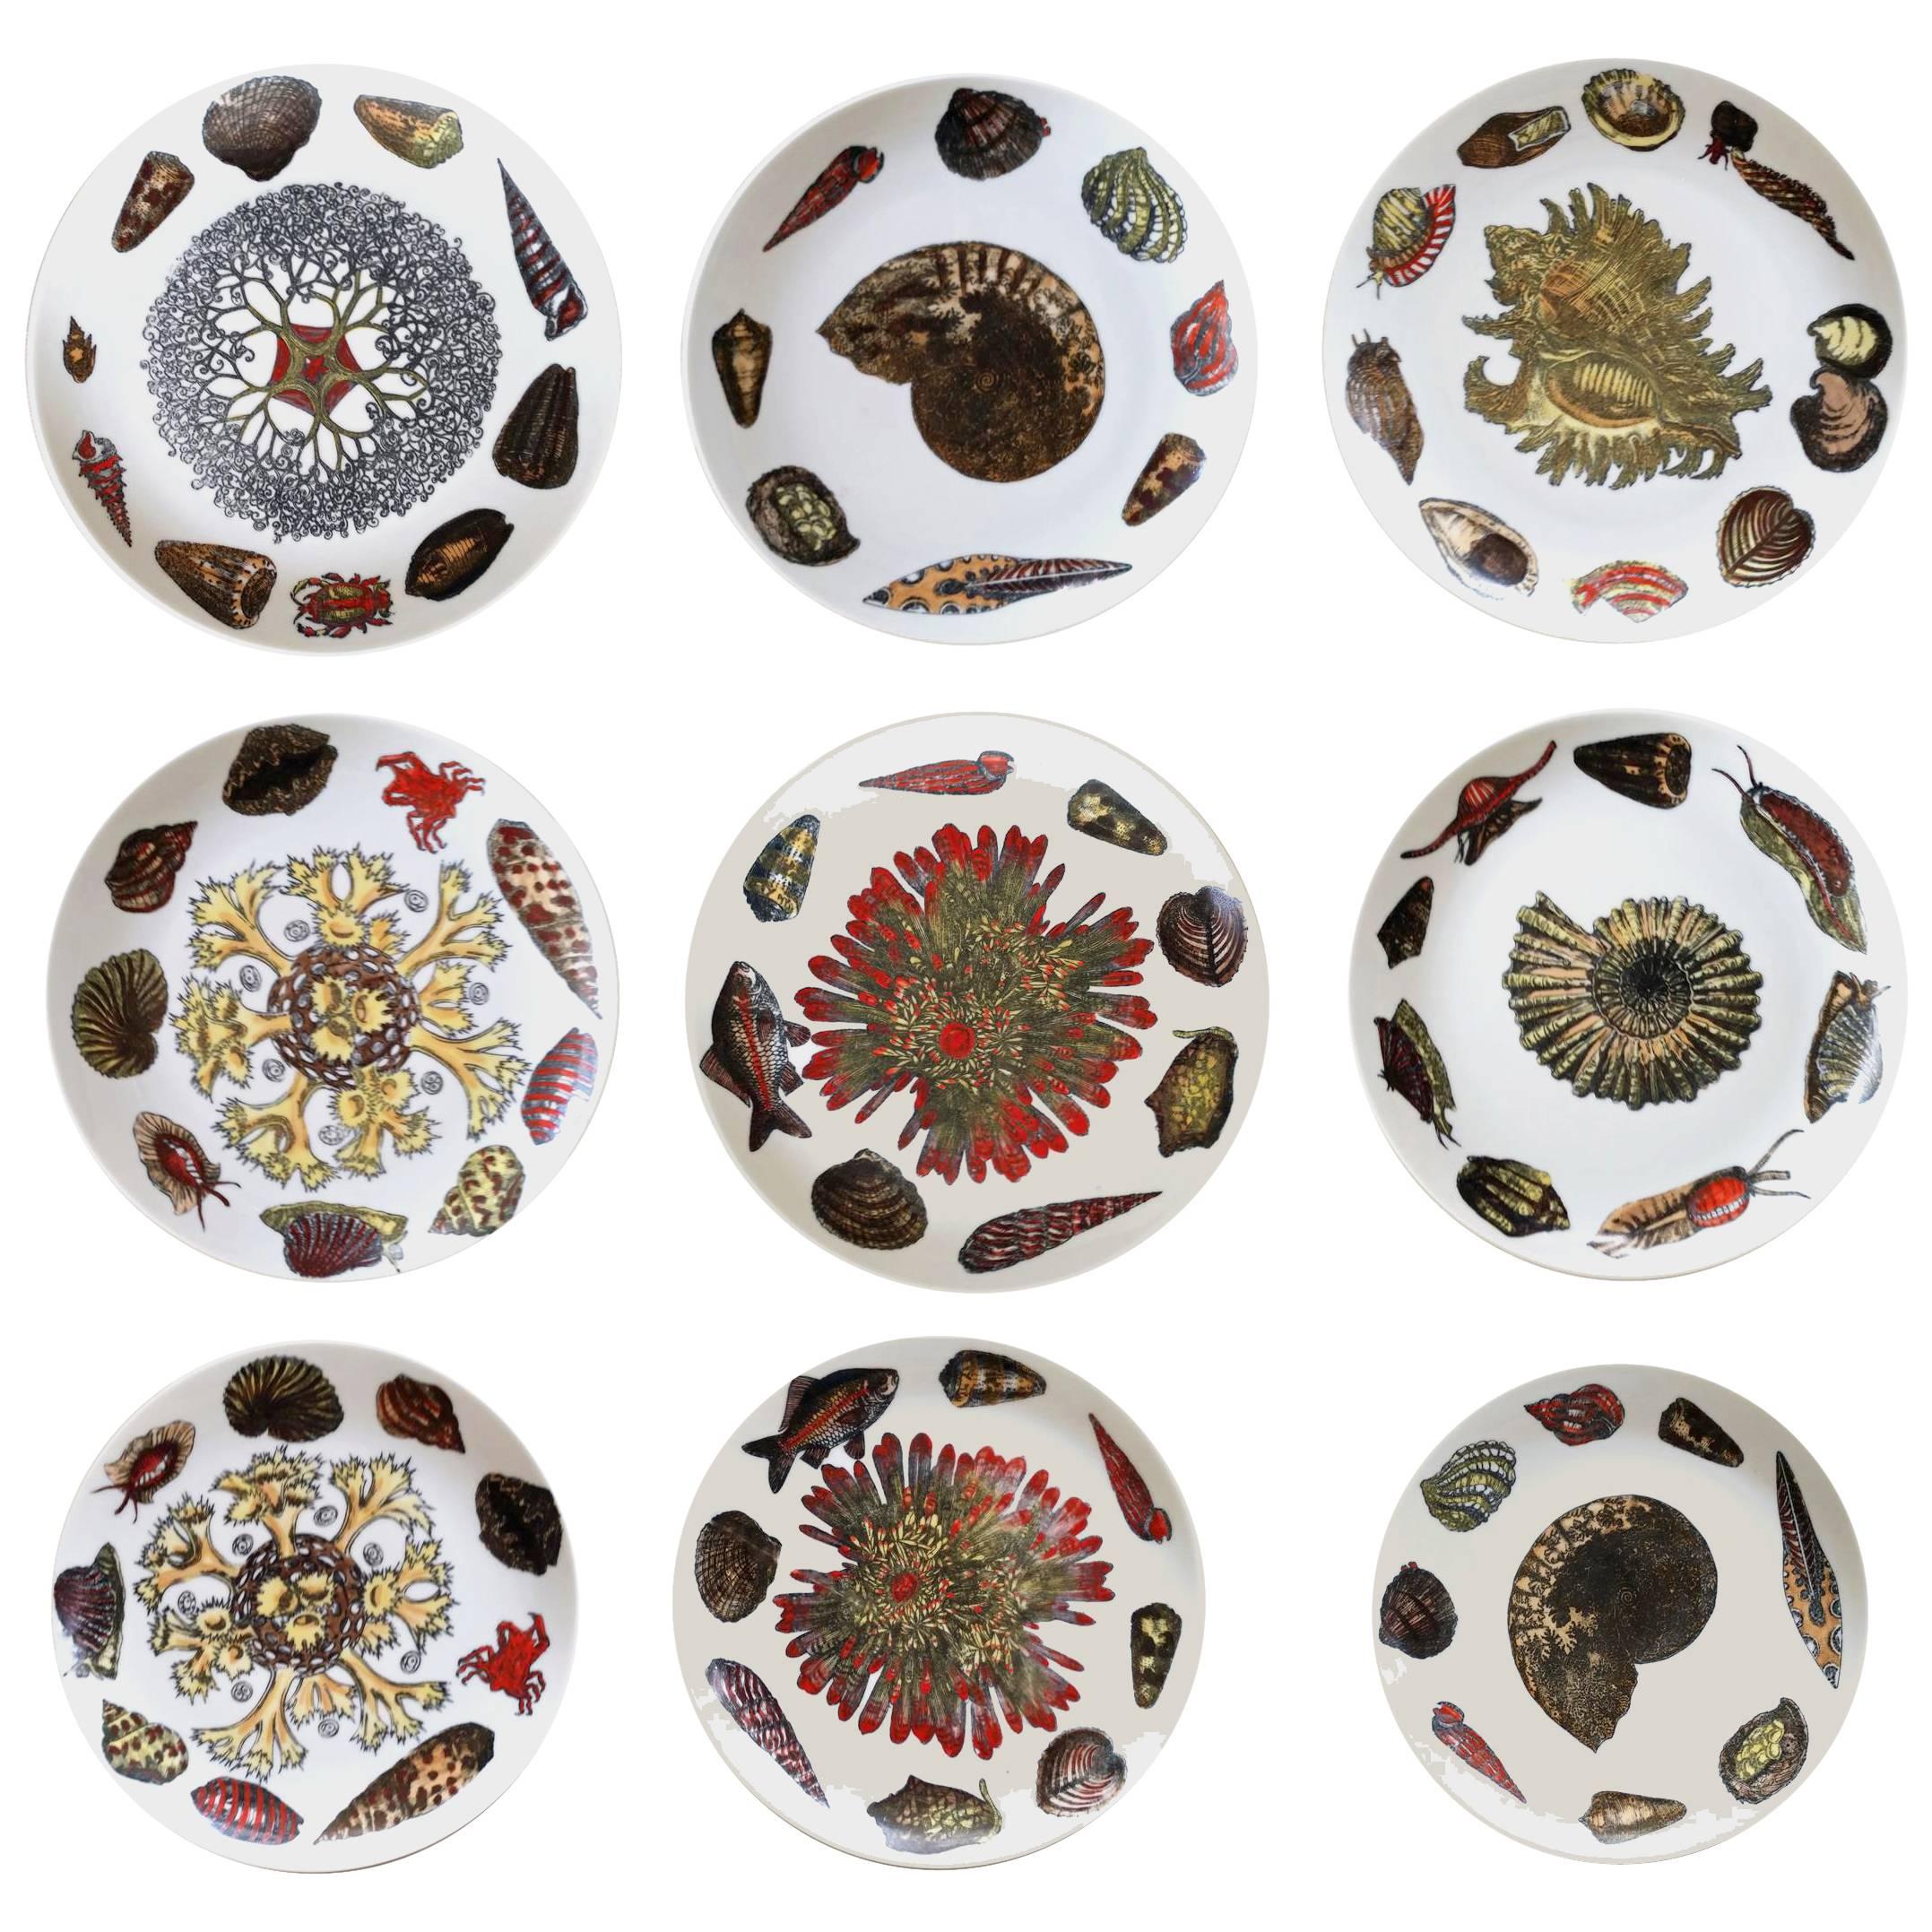 Piero Fornasetti Set of nine Plates in Early Conchiglie seashell pattern.